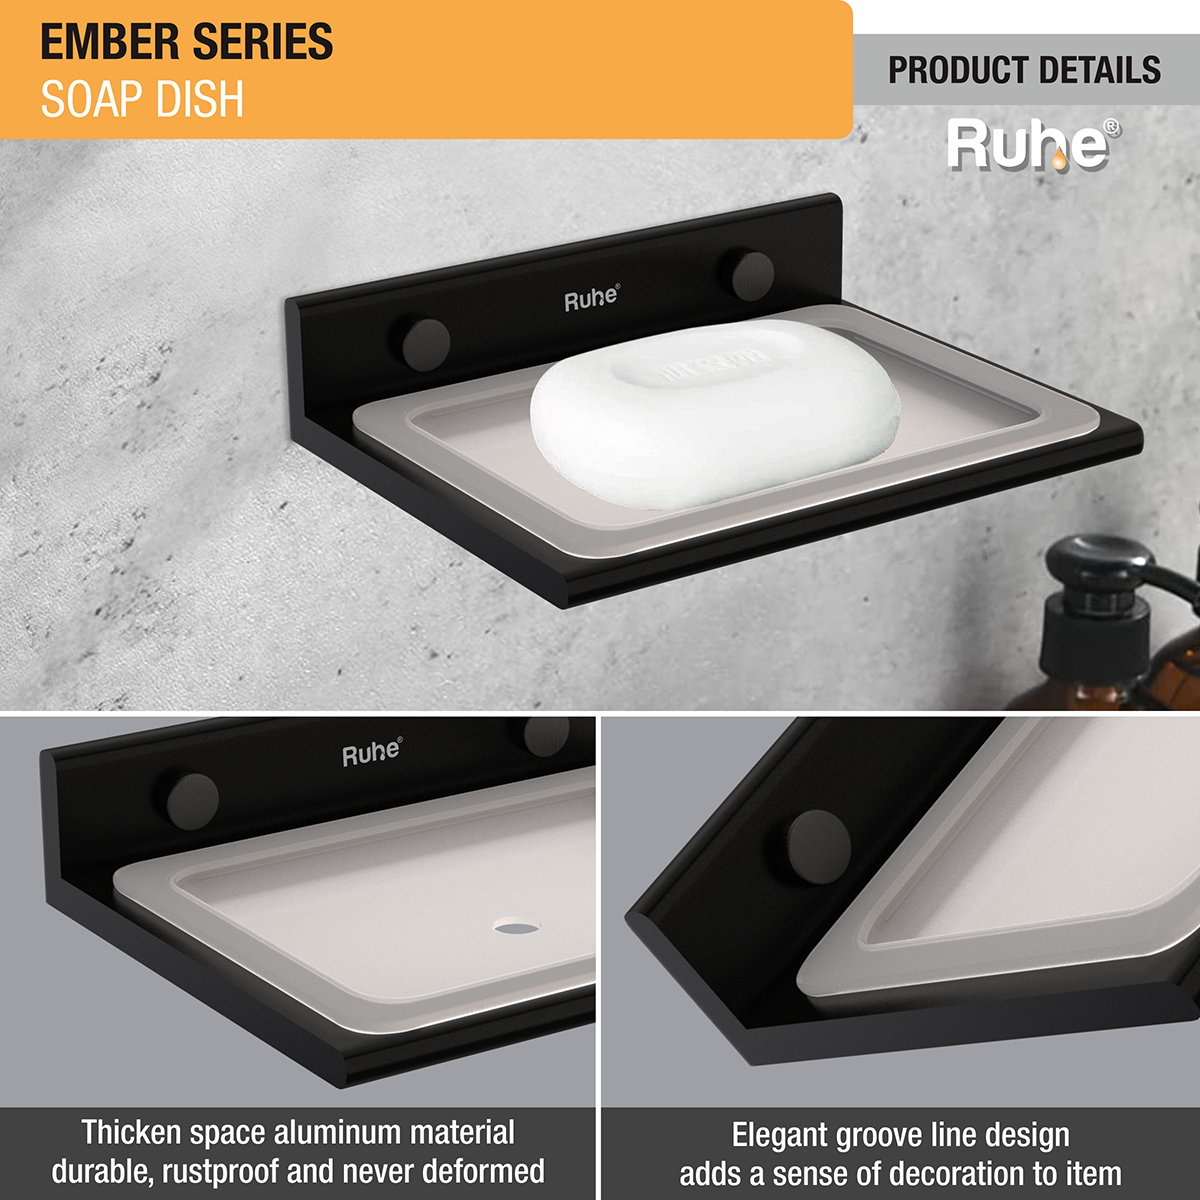 Ember Soap Dish (Space Aluminium) product details